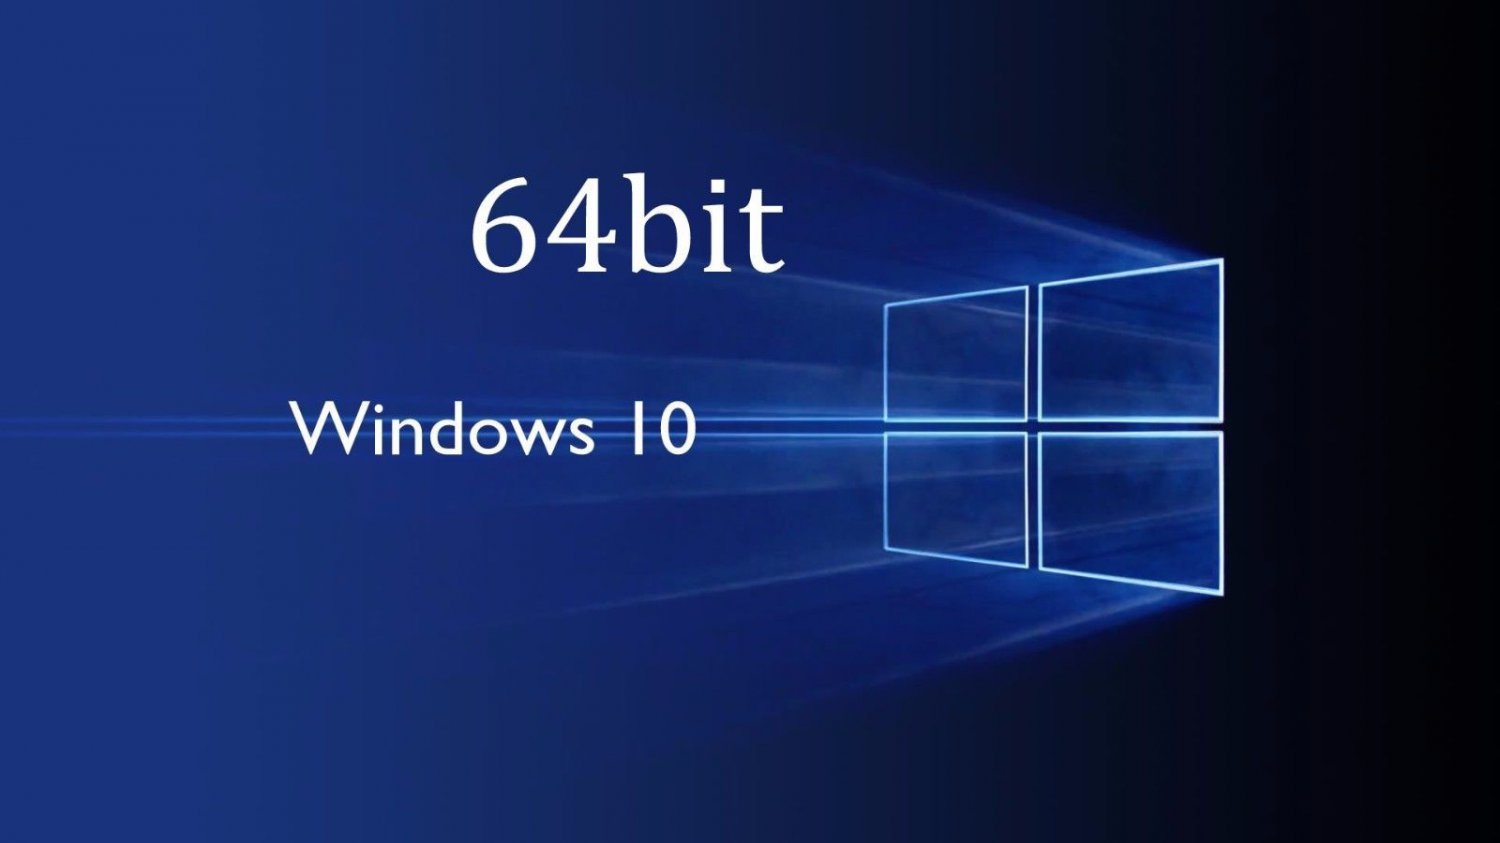 windows 10 home 64 bit iso free download full version